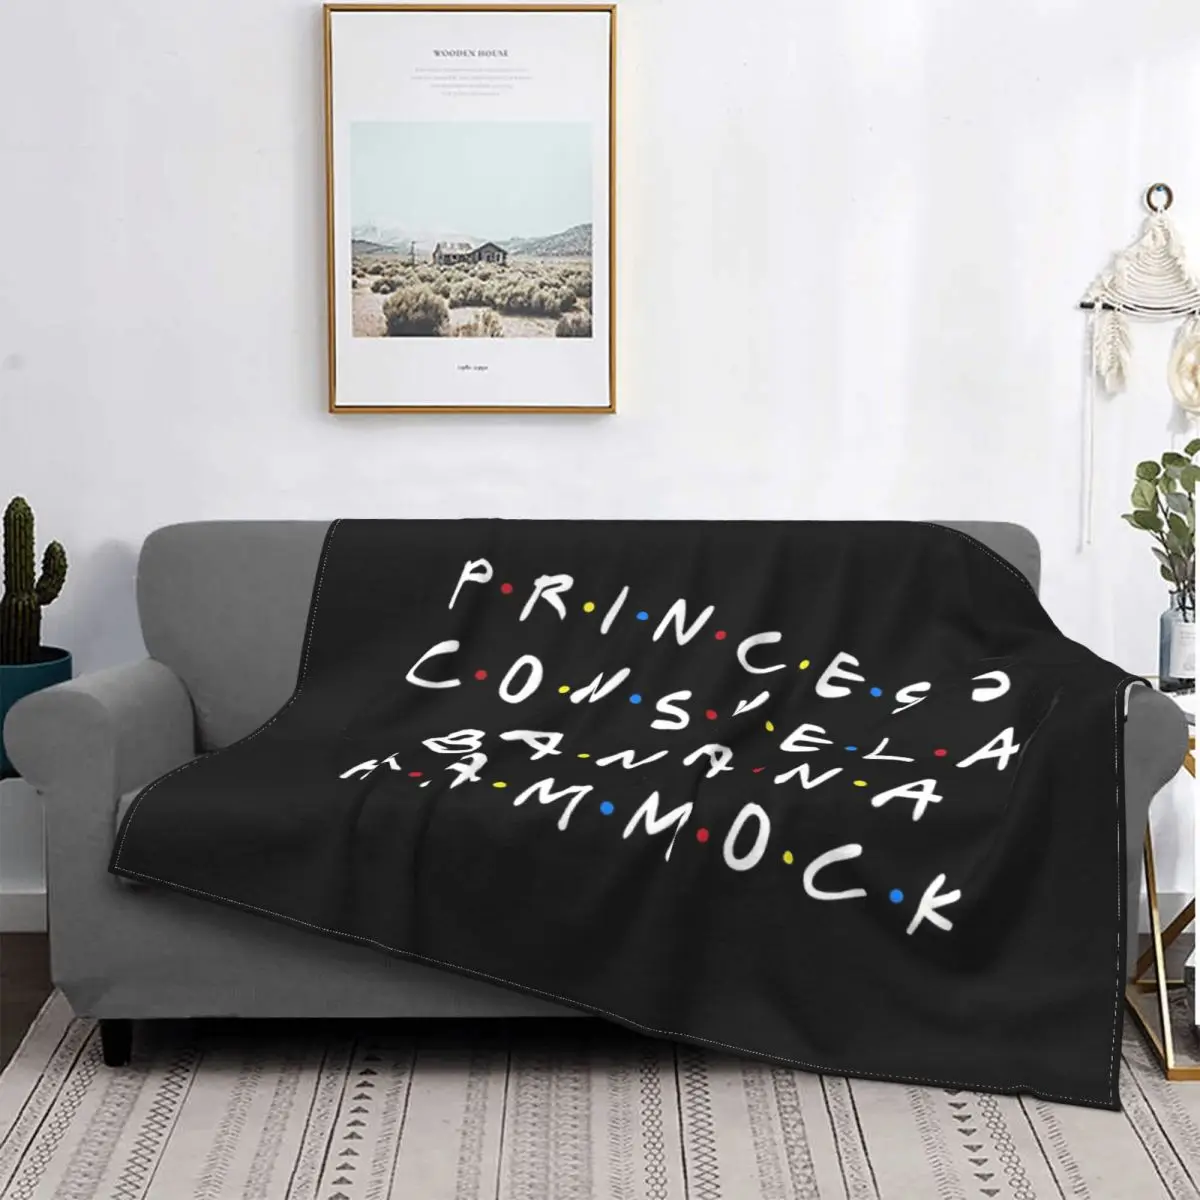 

Princess Consuela Banana Hammock 2 Blanket Bedspread On The Bed Soft Soft Bed Blanket Ultralight Decorative Sofa Blankets